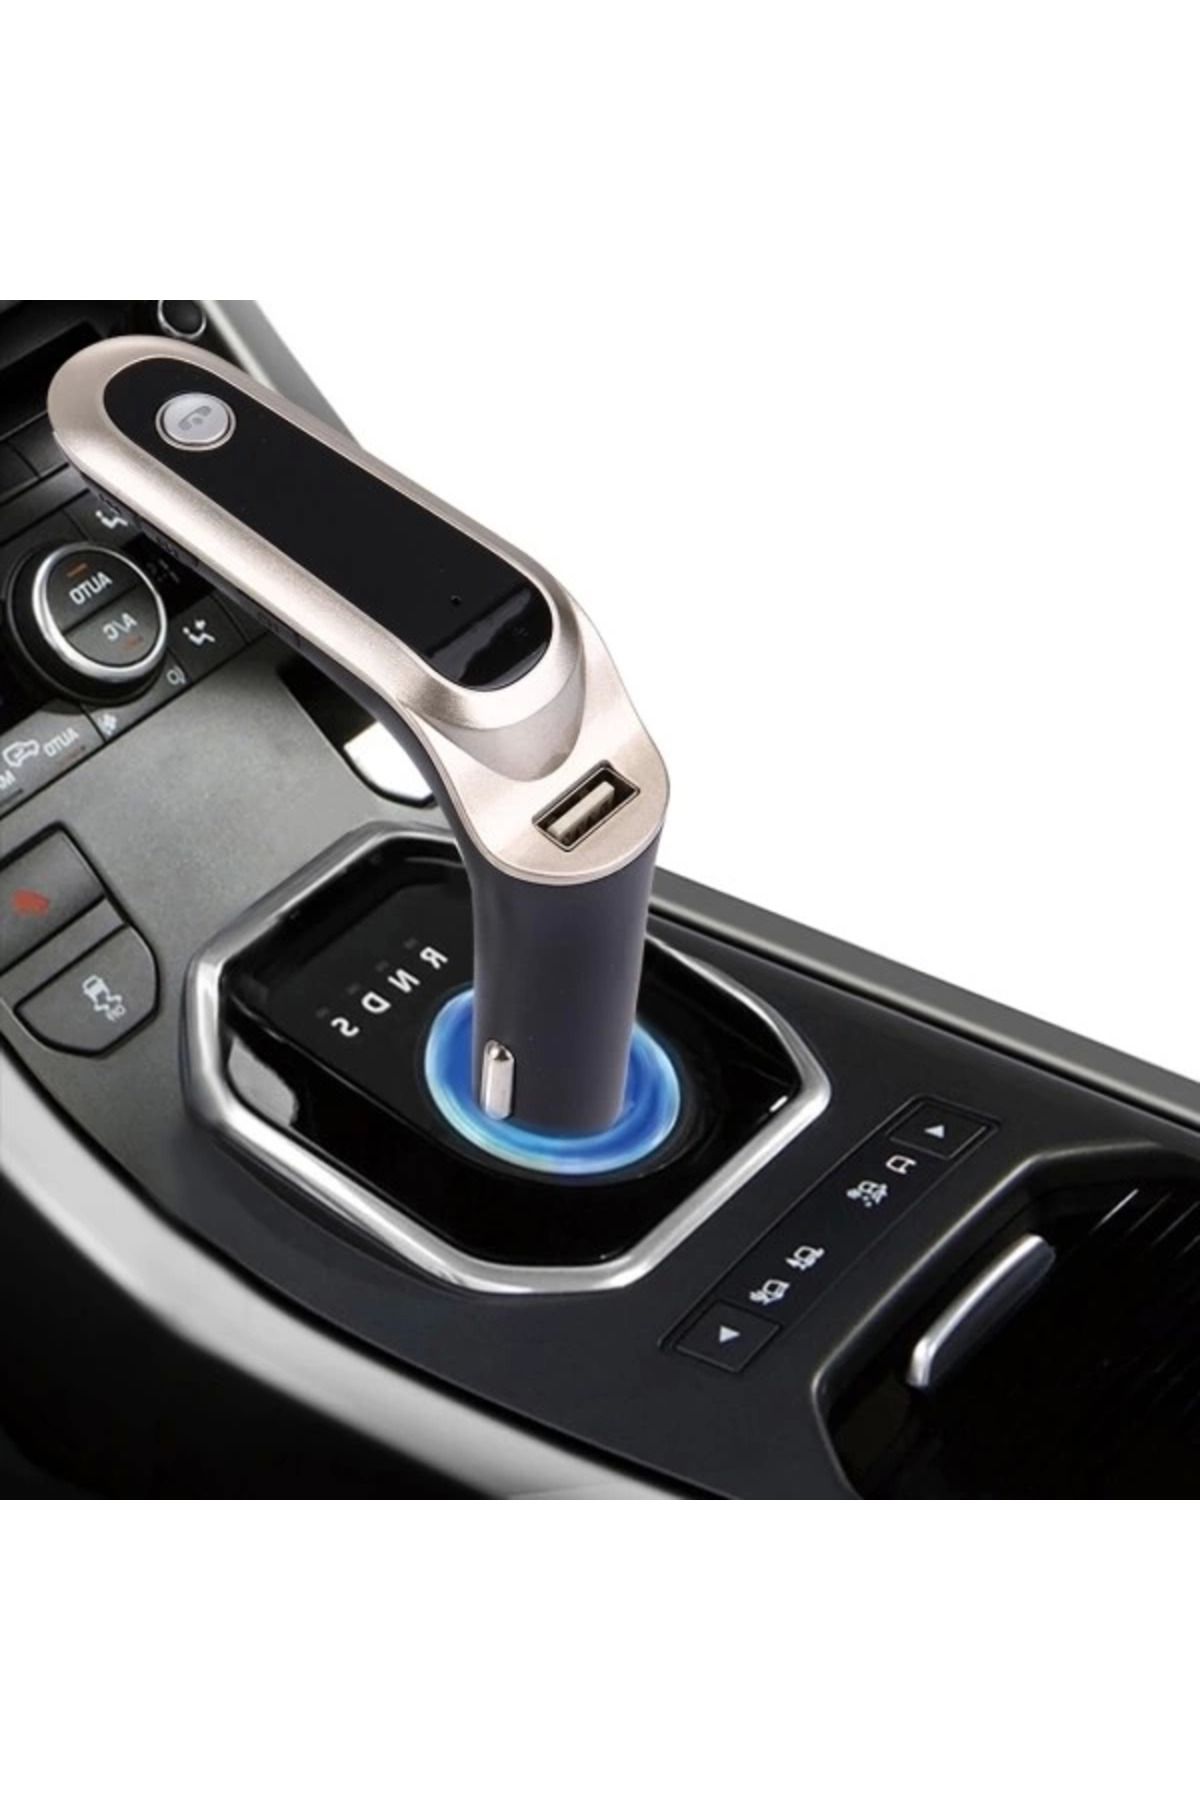 Lisinya Cars7 Bluetooth Hafıza Kart Girişli 4.0 Araç Kiti Çakmaklık Mp3 Fm Transmitter ( Lisinya )